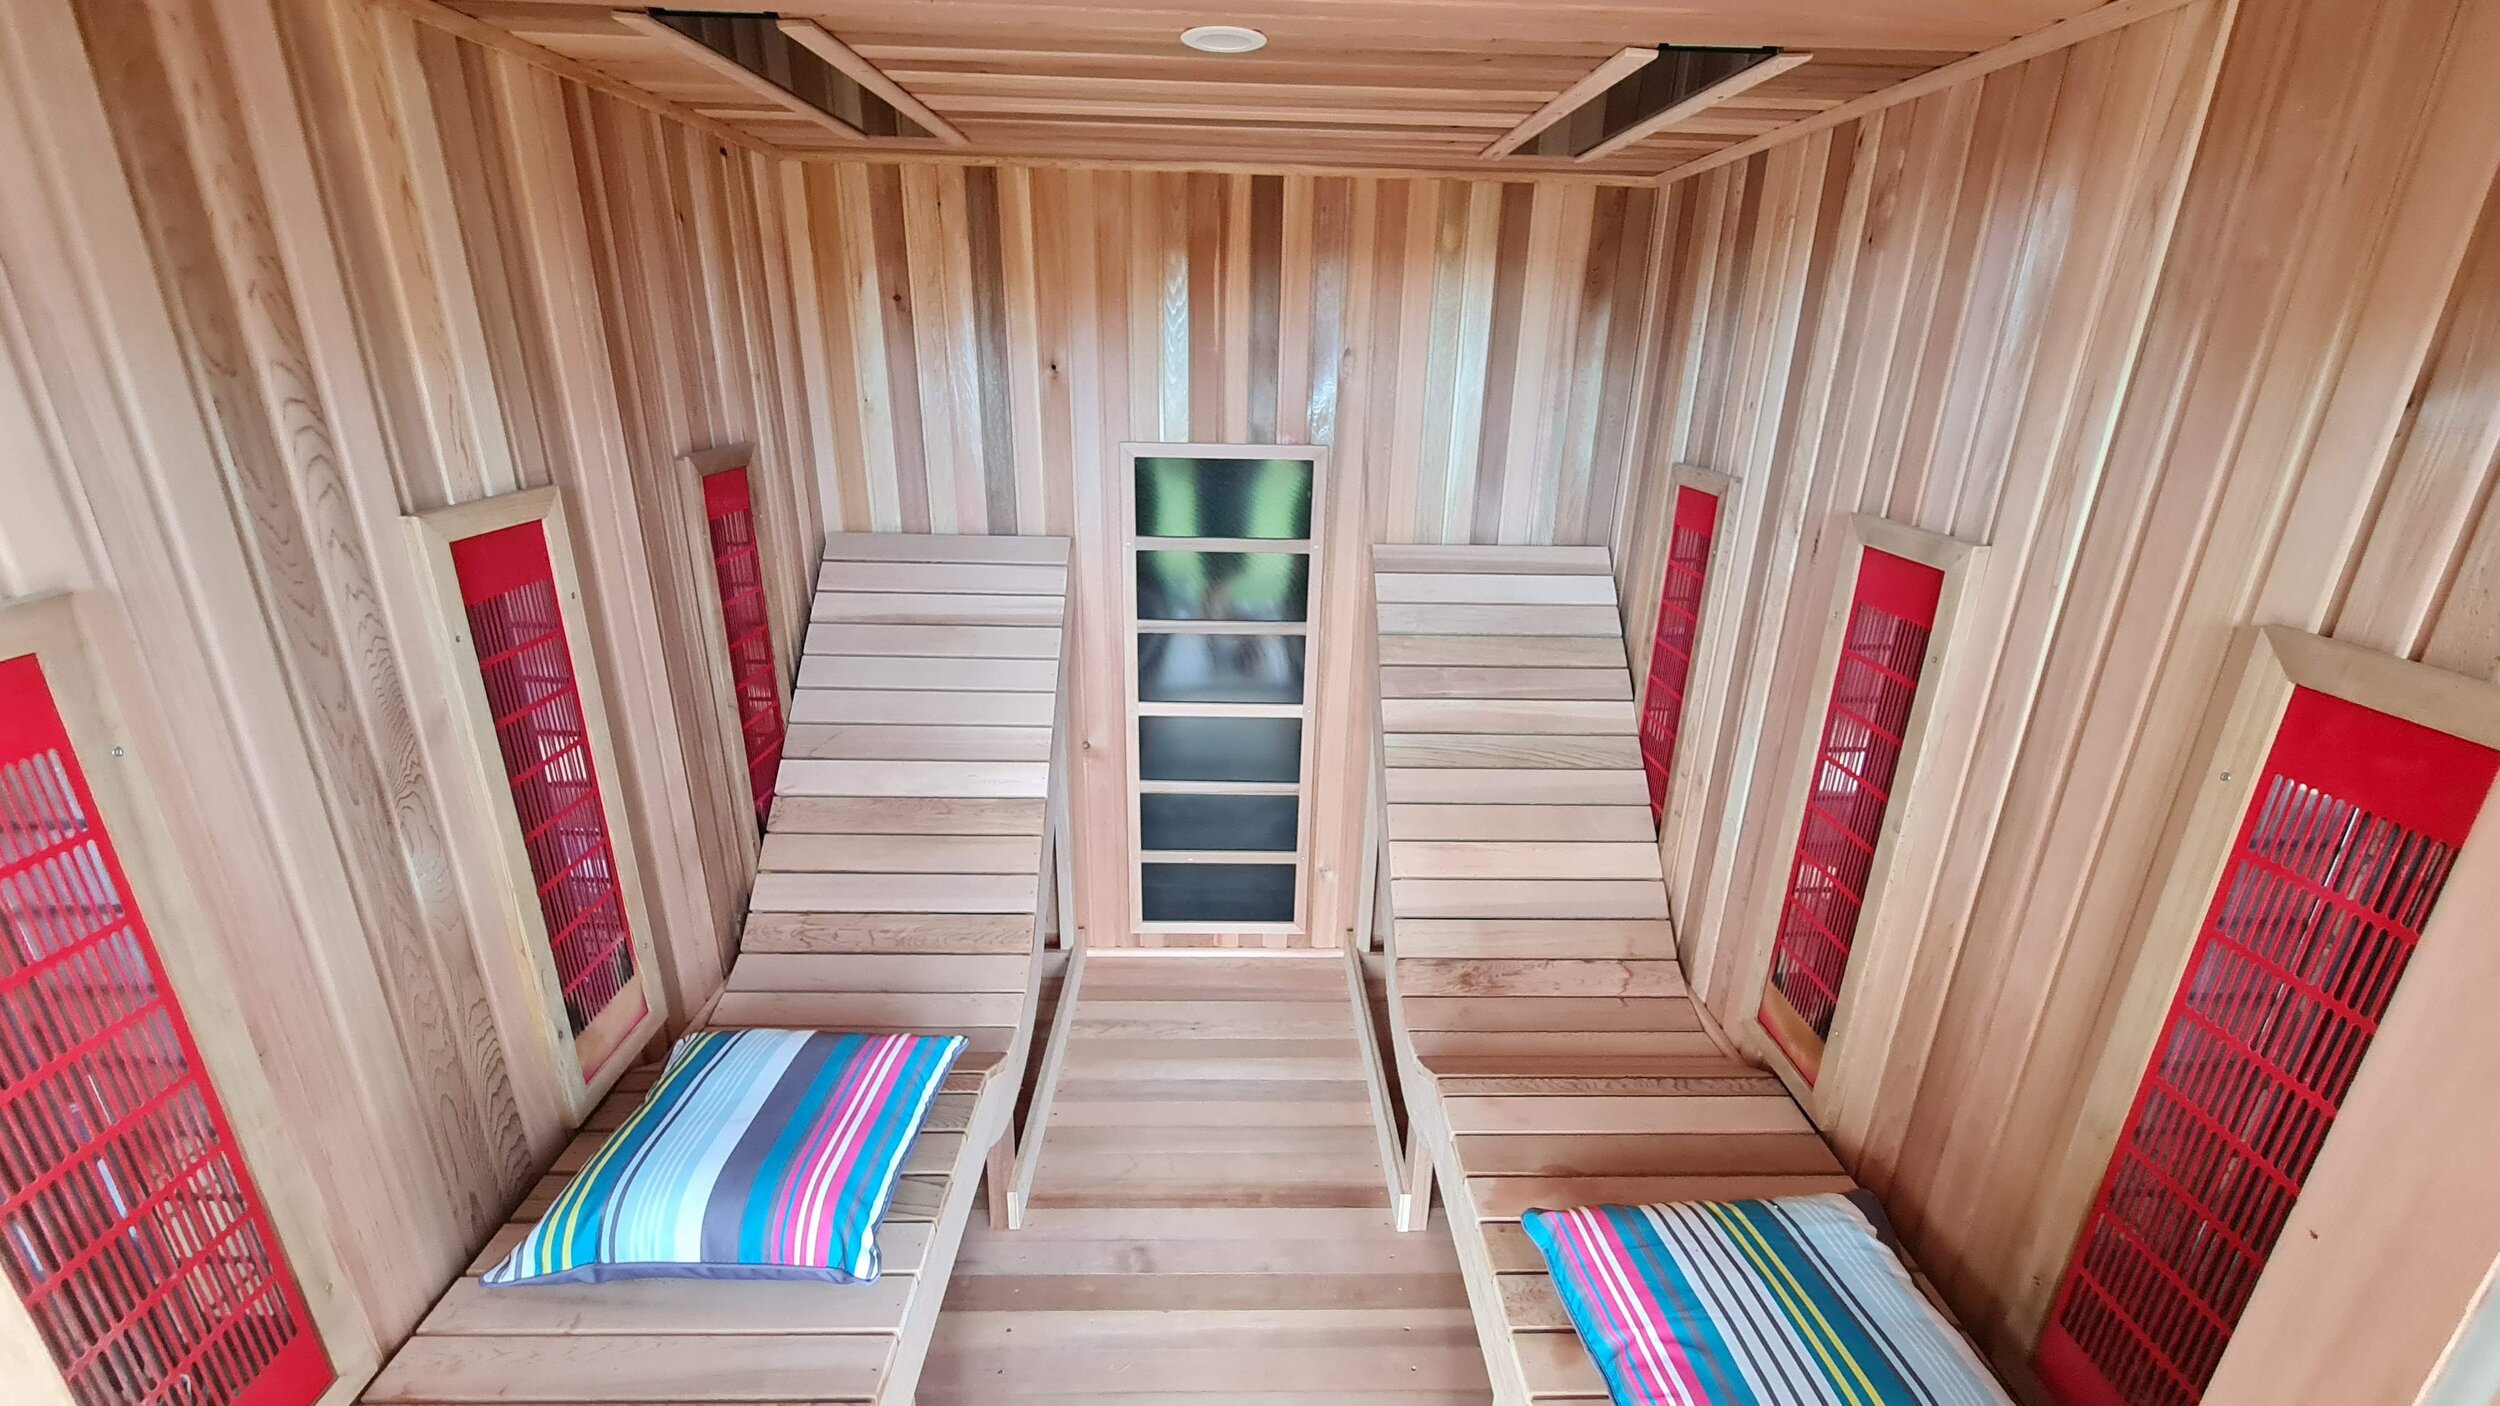 How to build a sauna –